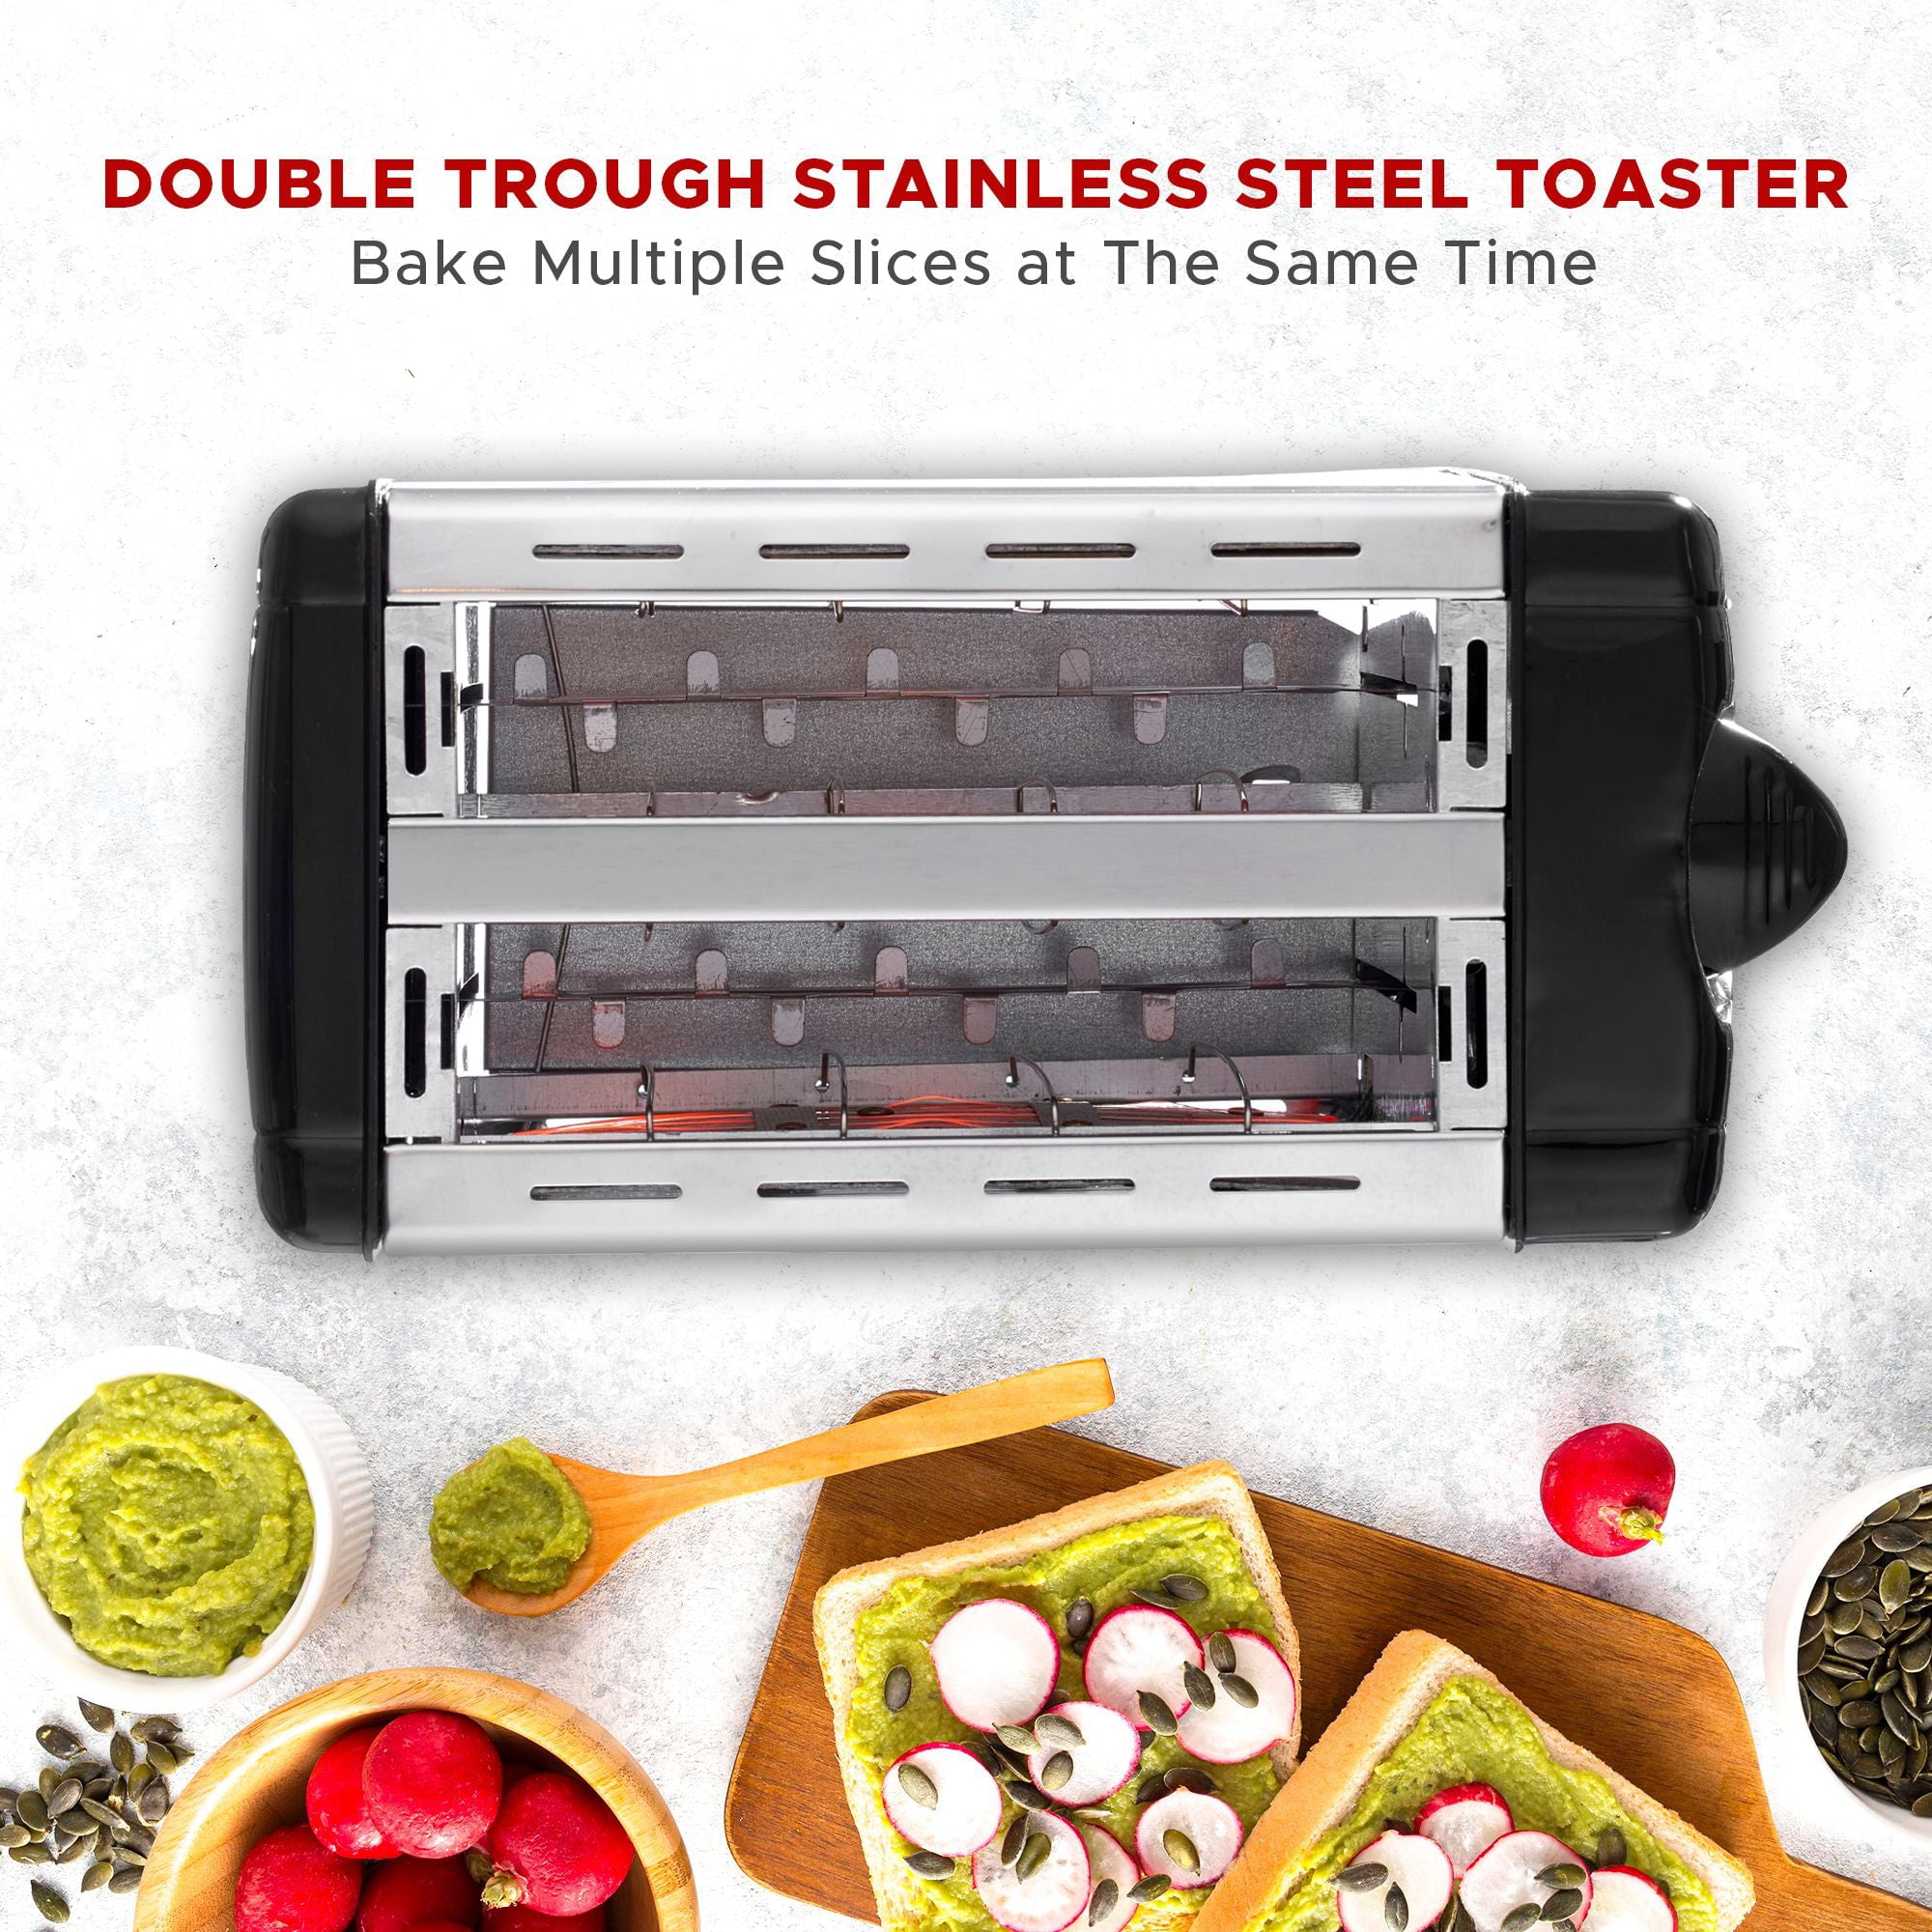 Lumme 4 slice Toaster Oven – LummeHome